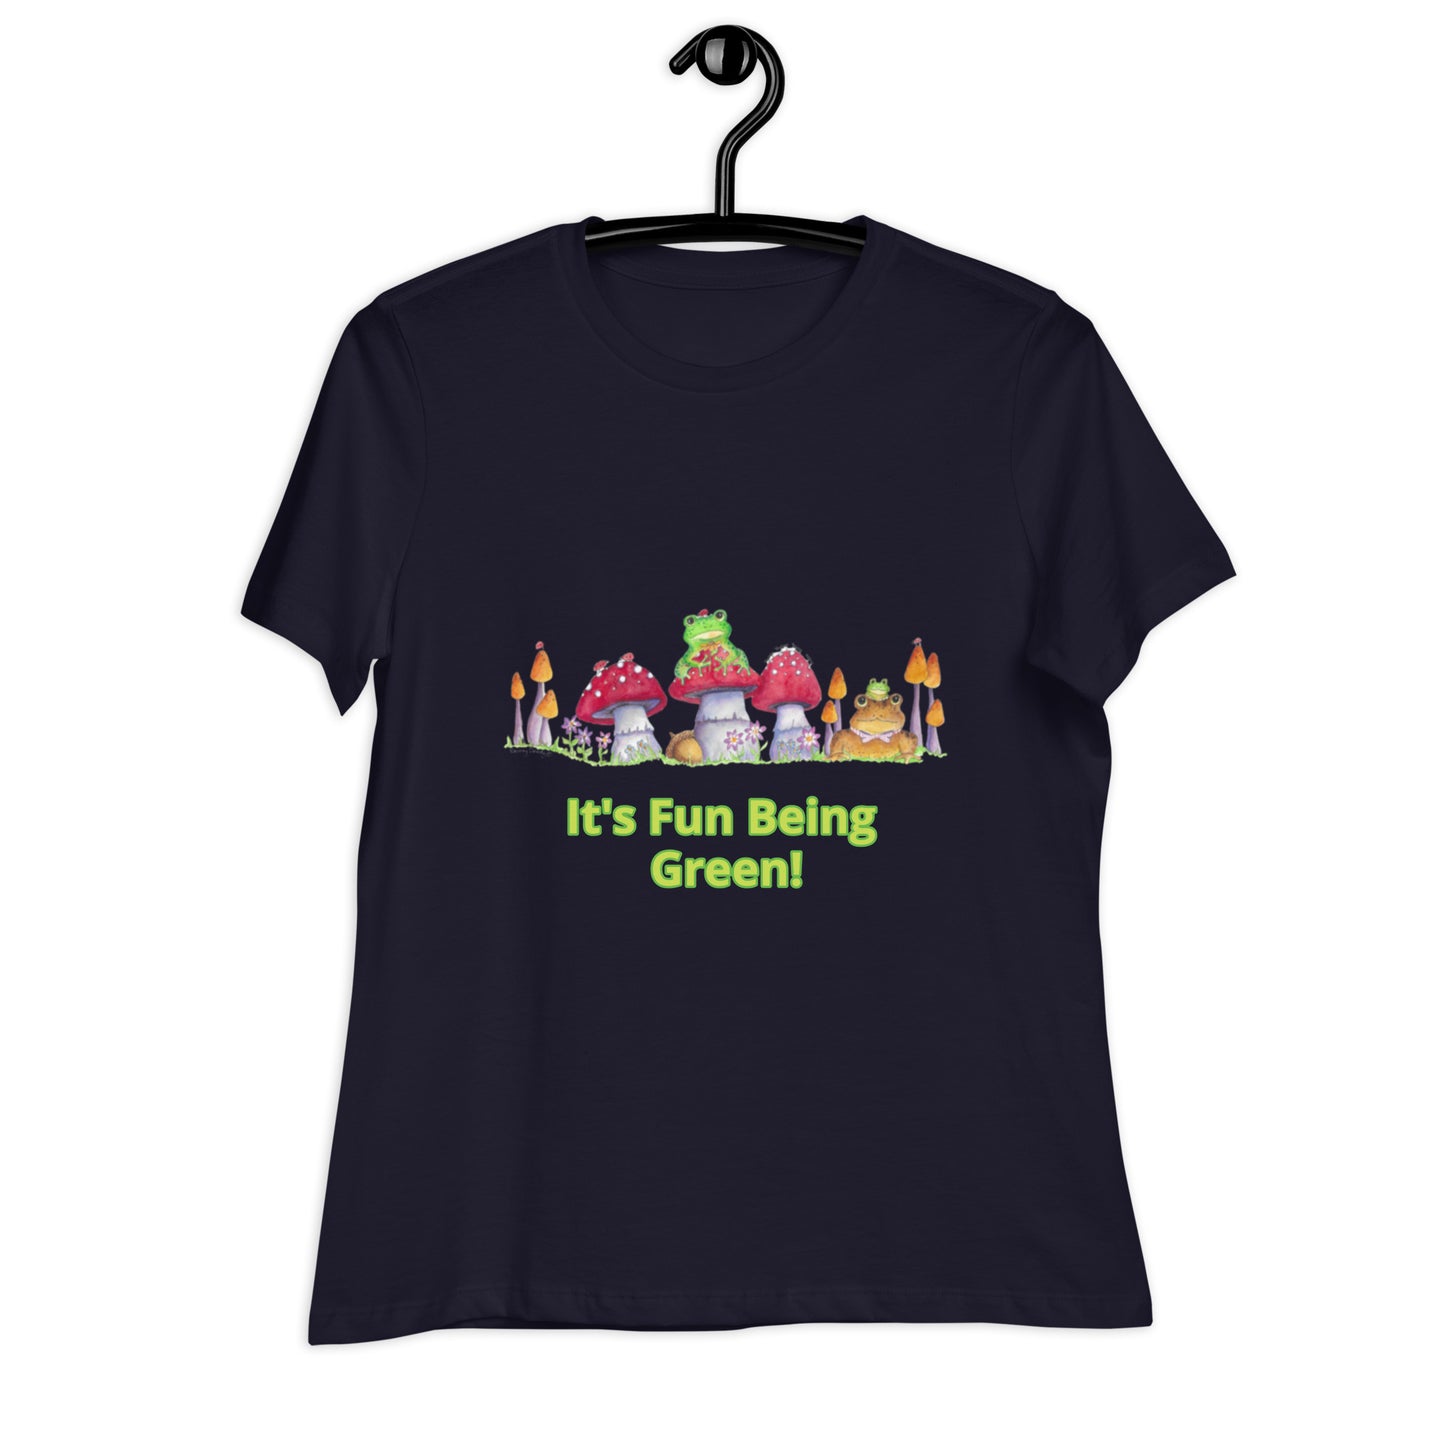 "It's Fun Being Green!" Women's Relaxed T-Shirt